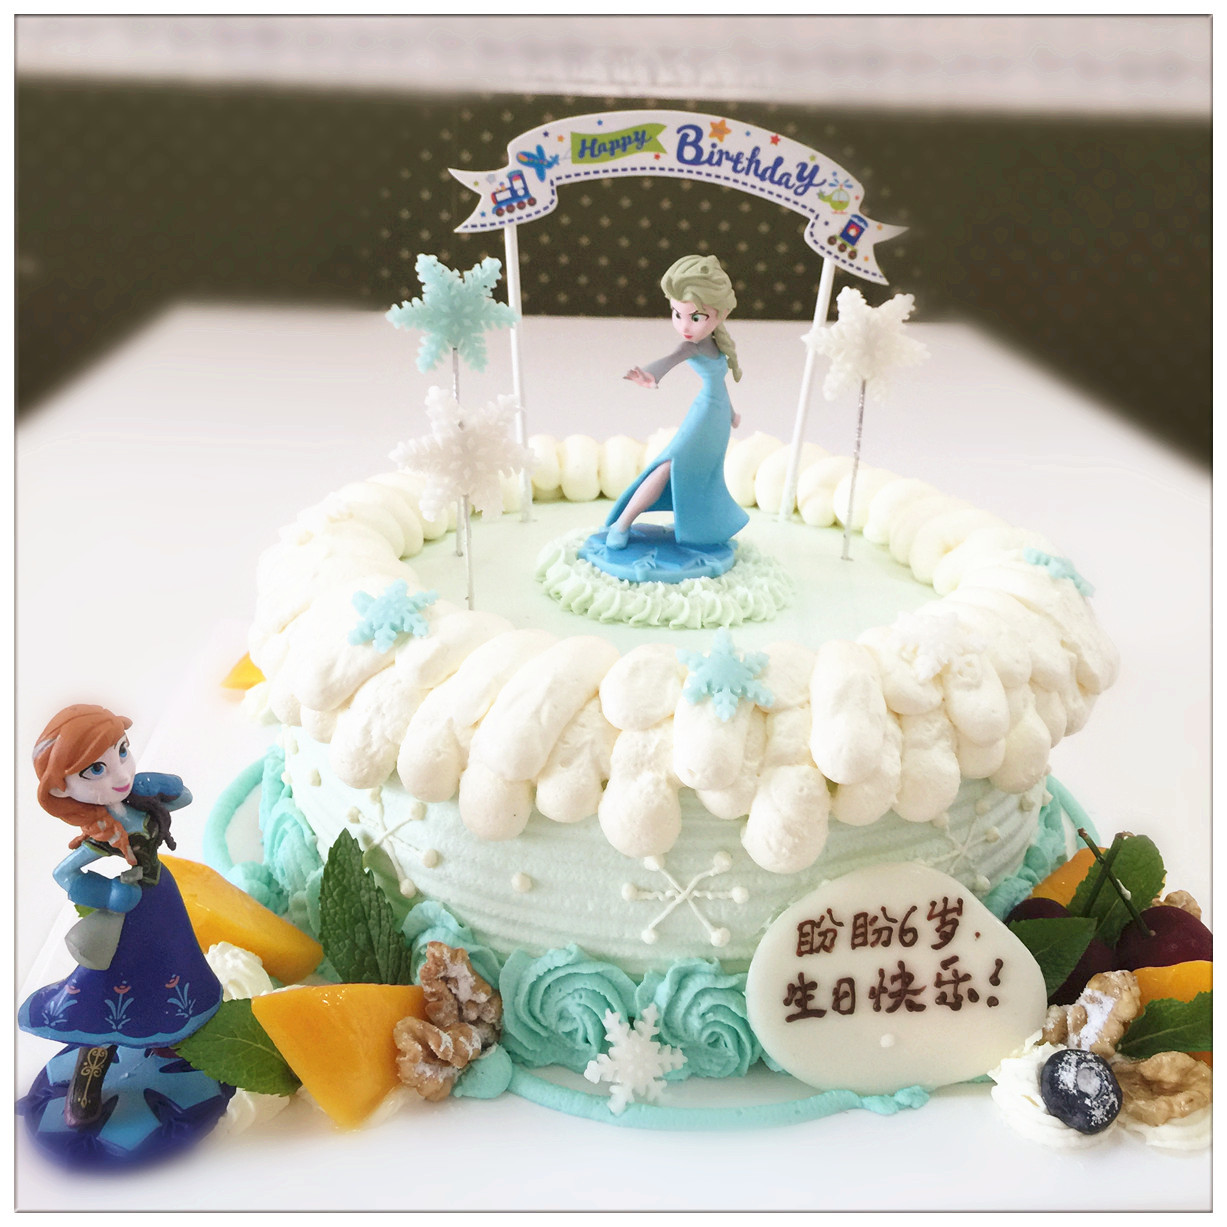 To LoVe 2015: 冰雪奇缘生日蛋糕 （Frozen Birthday Cake）